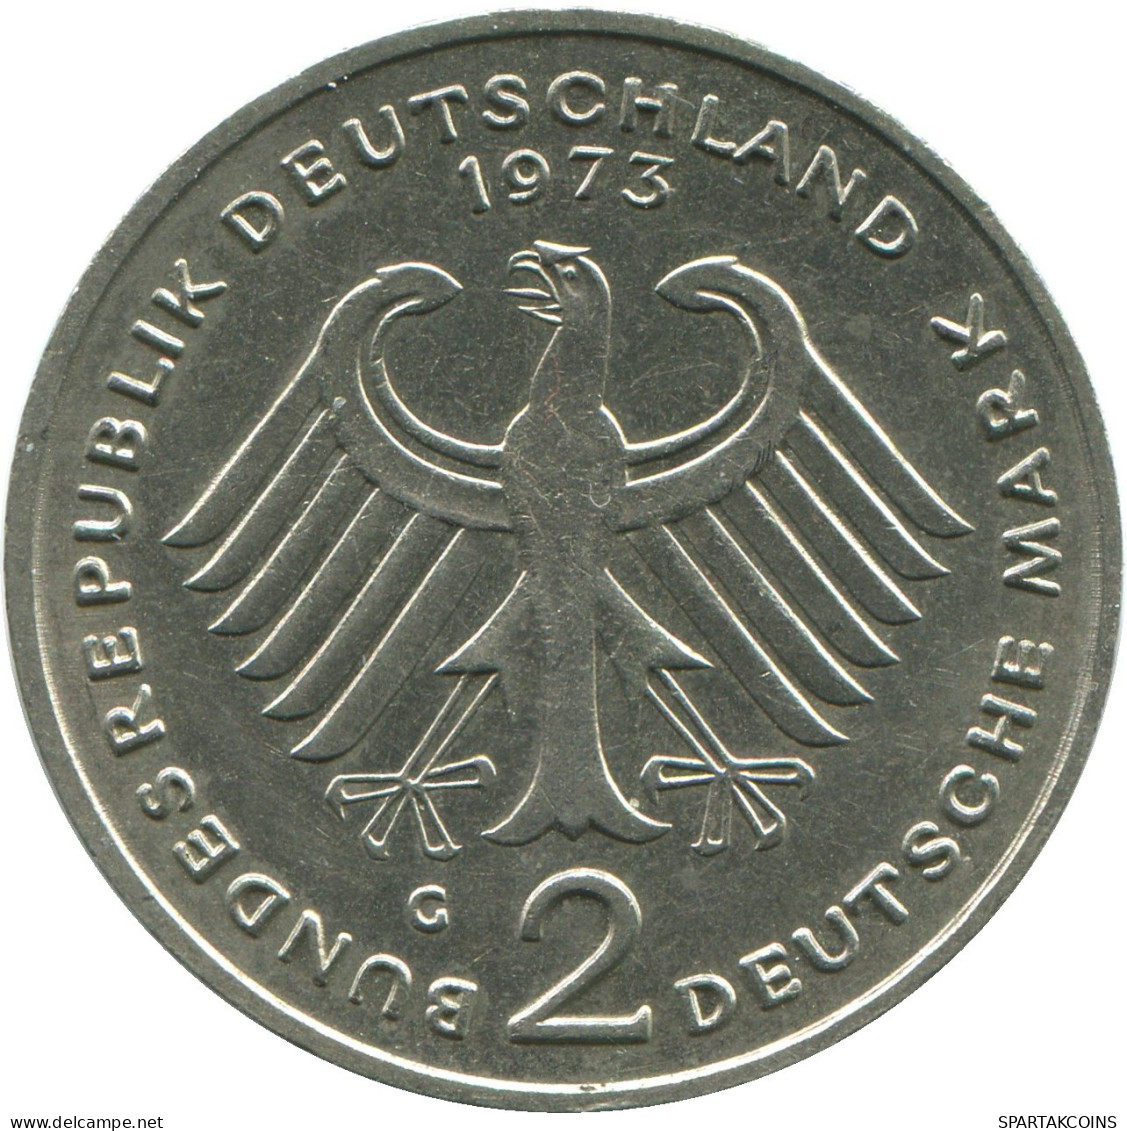 2 DM 1973 G WEST & UNIFIED GERMANY Coin #DE10391.5.U.A - 2 Mark